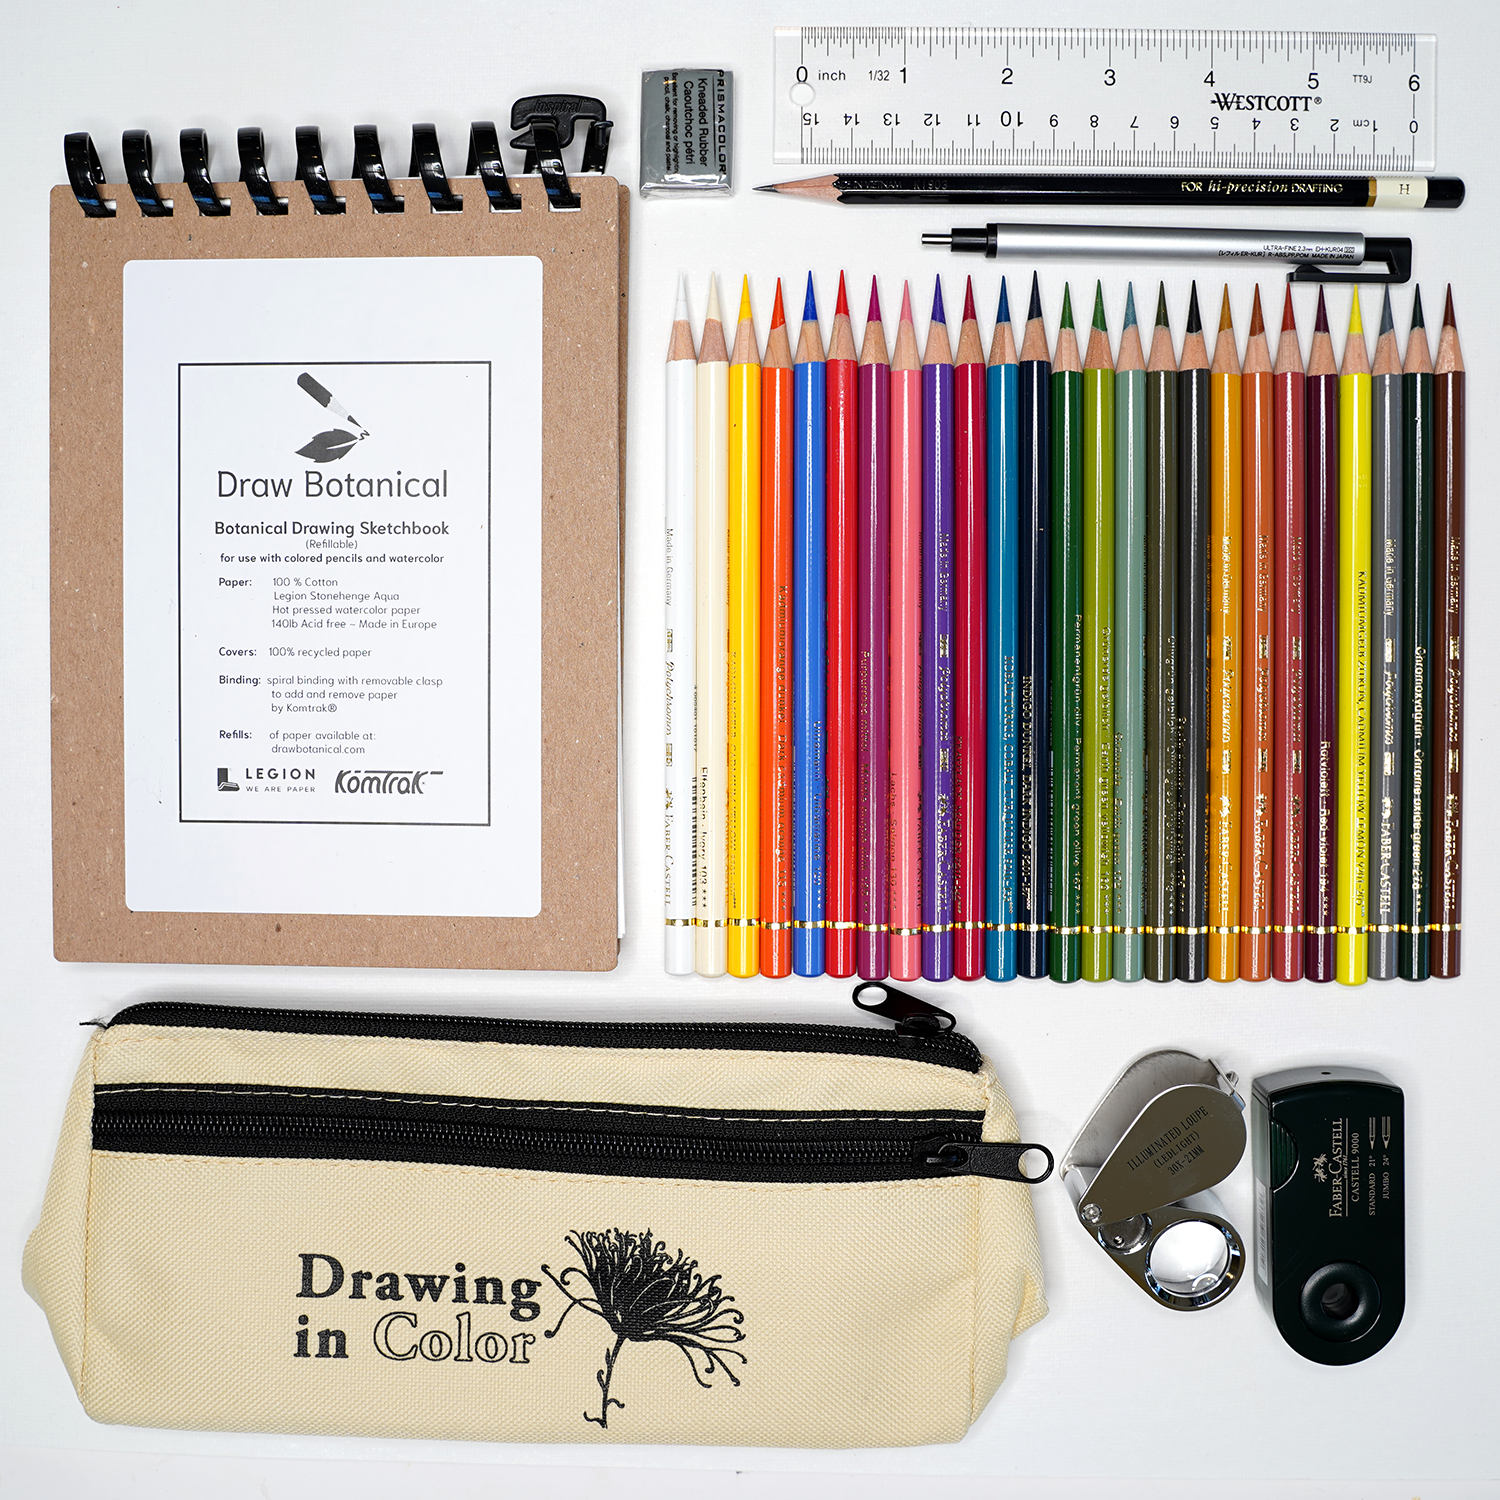 Art Supply Kit: Explore and Draw - Draw Botanical LLC